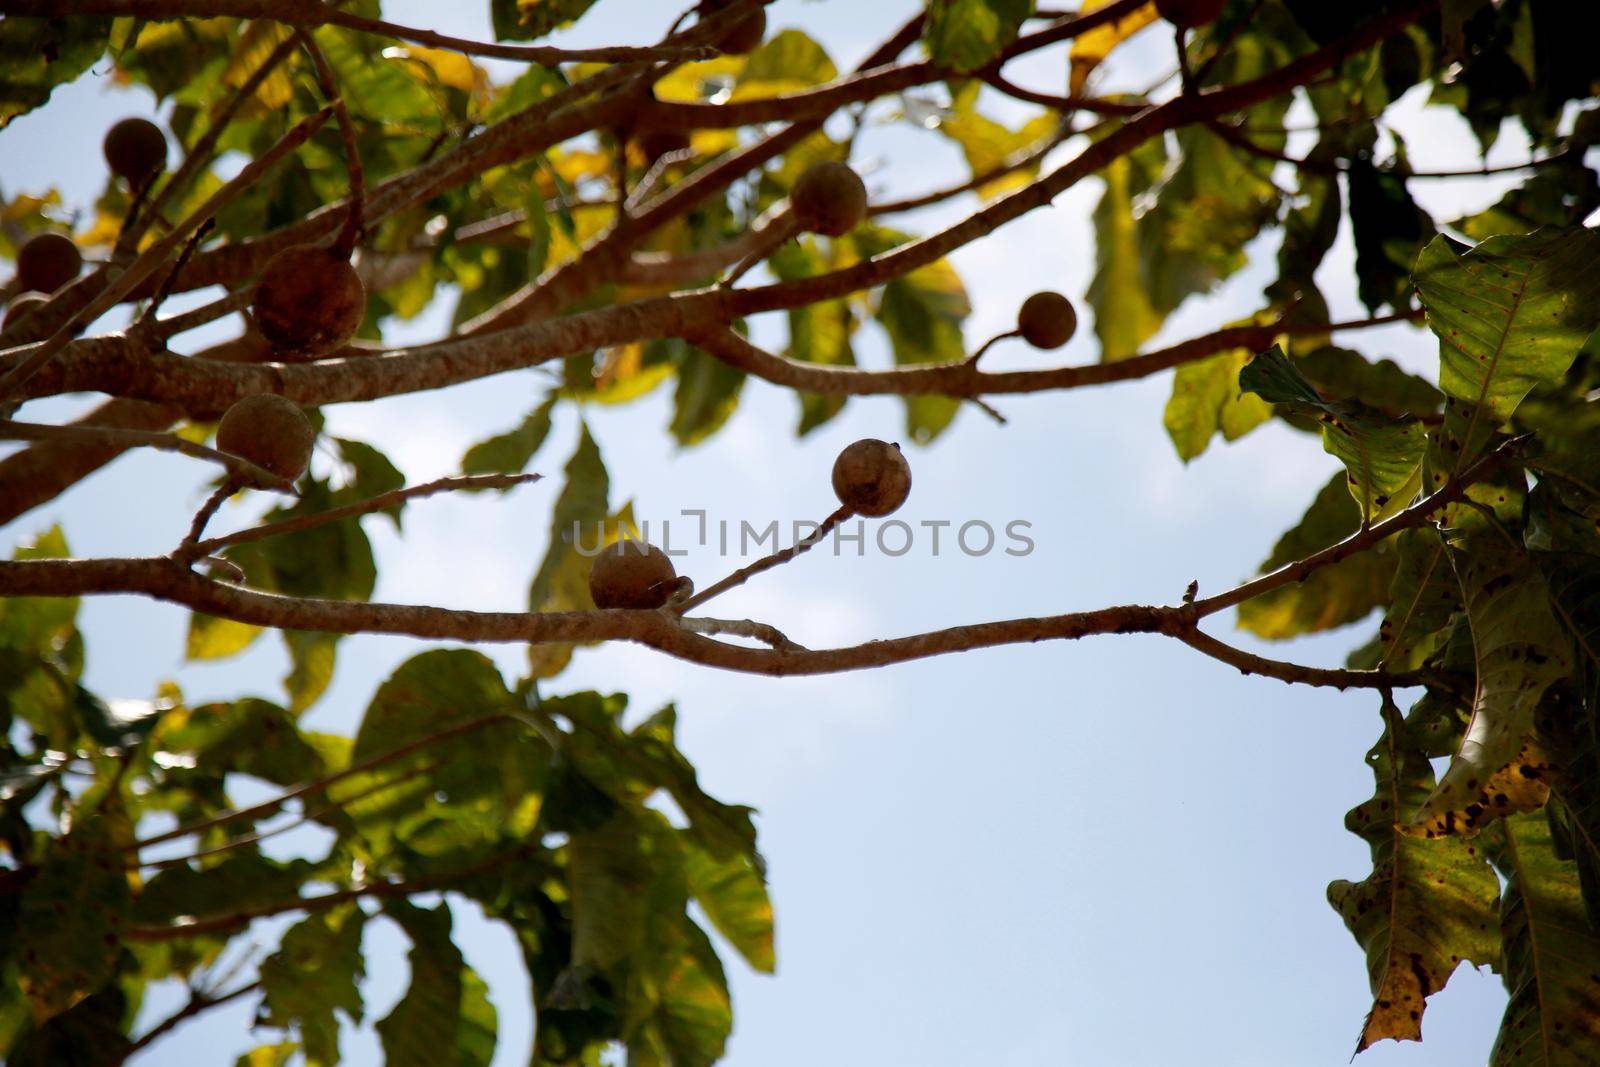 mata de sao joao, bahia / brazil - october 25, 2020: genipapo tree is seen in the countryside in the city of Mata de Sao Joao.